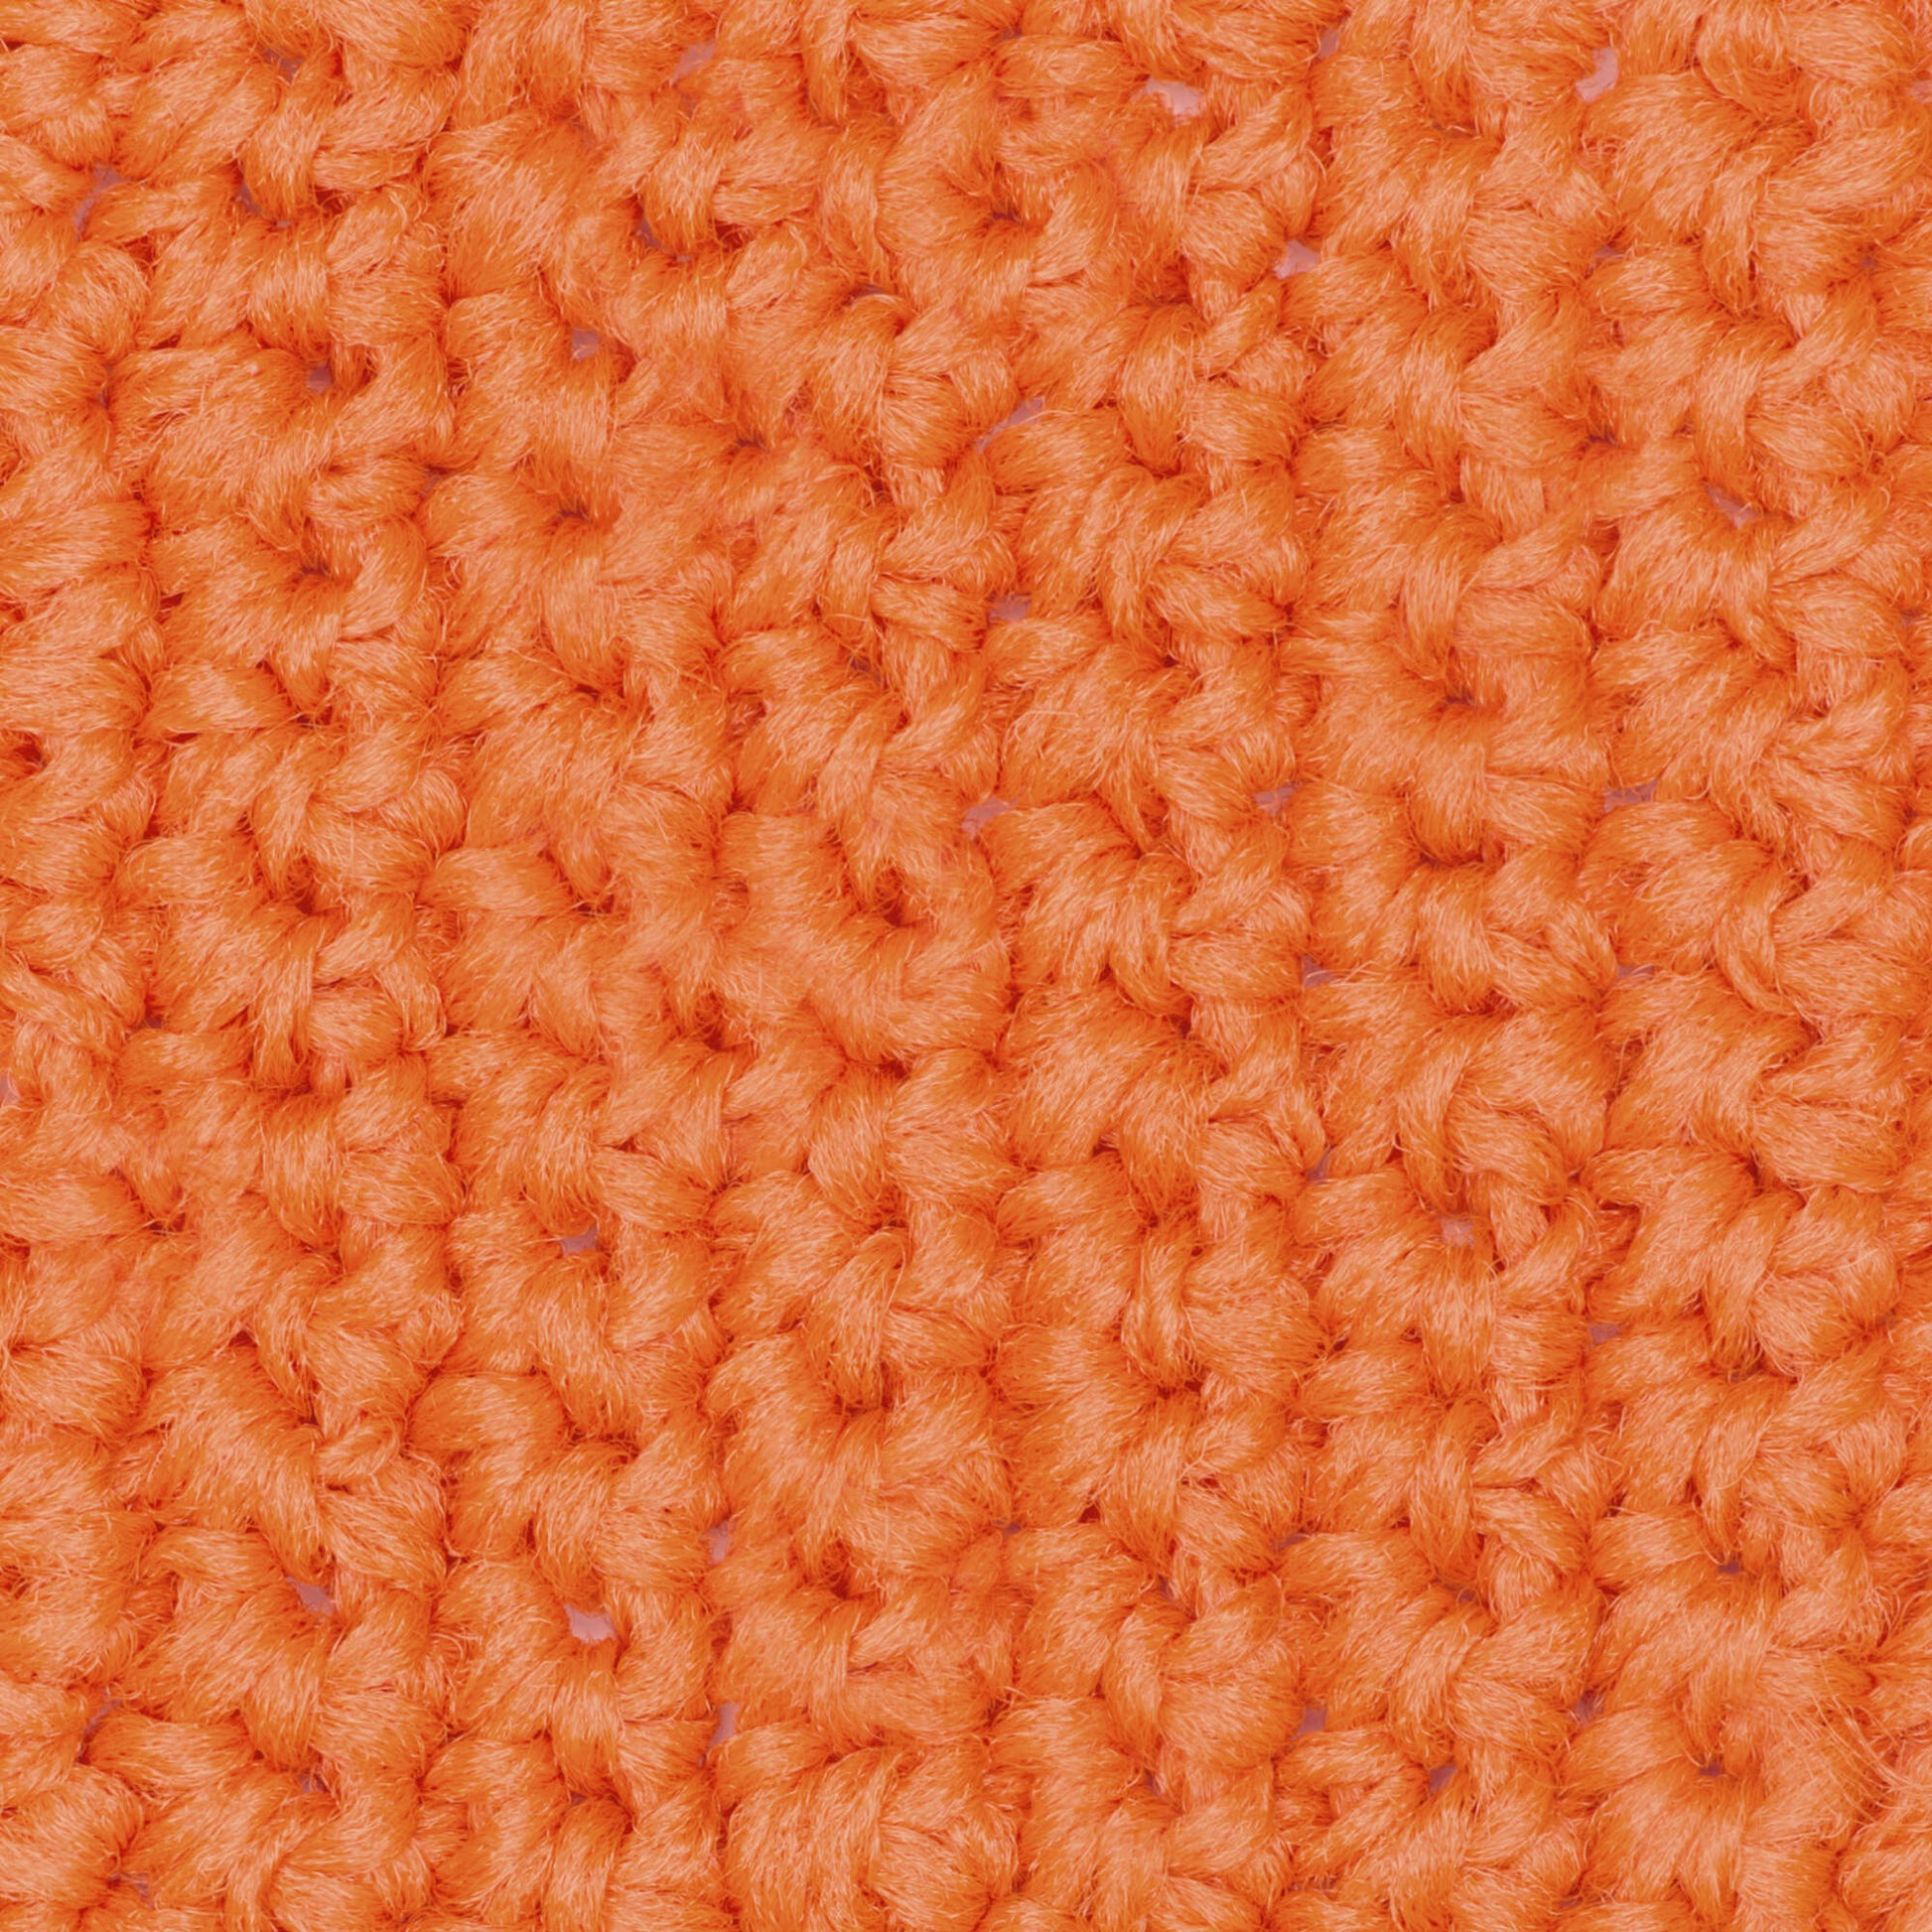 Phentex Slipper & Craft Yarn - Discontinued Shades